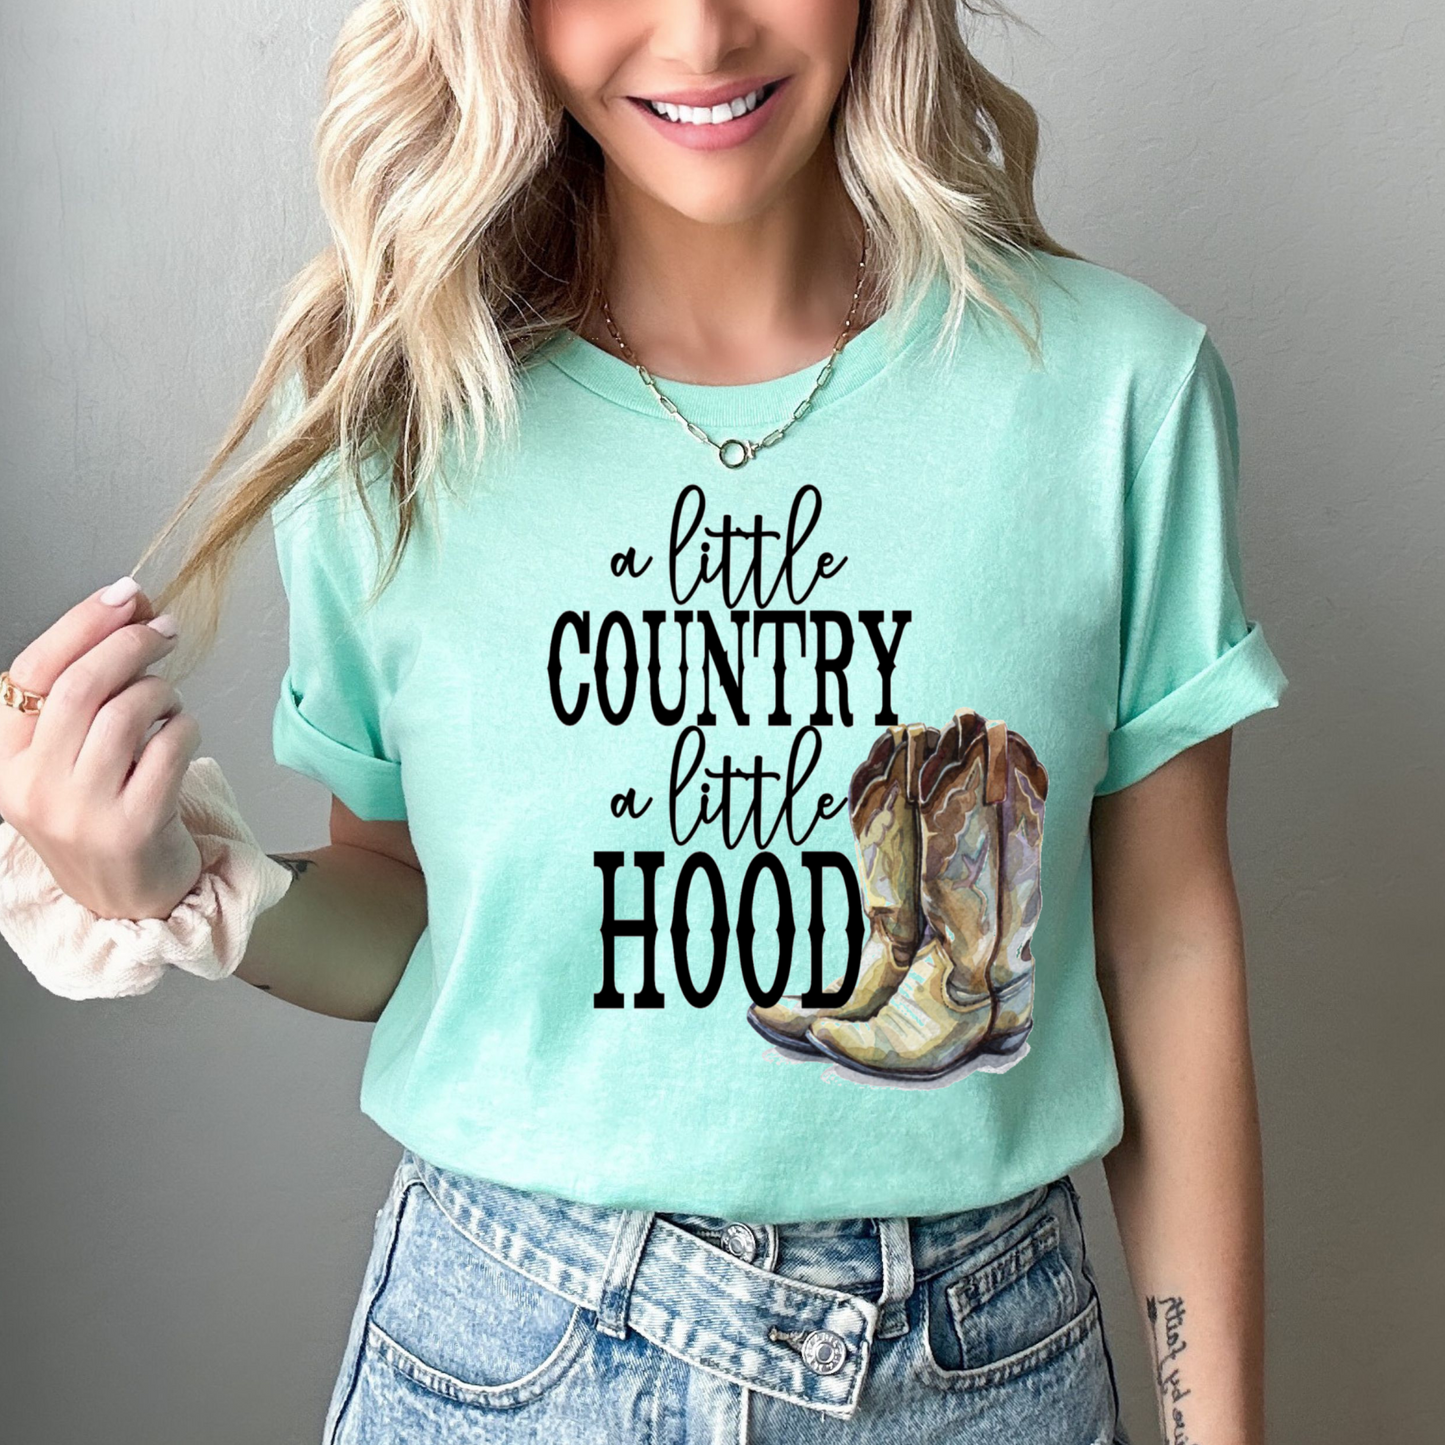 Country Hood Graphic Tee